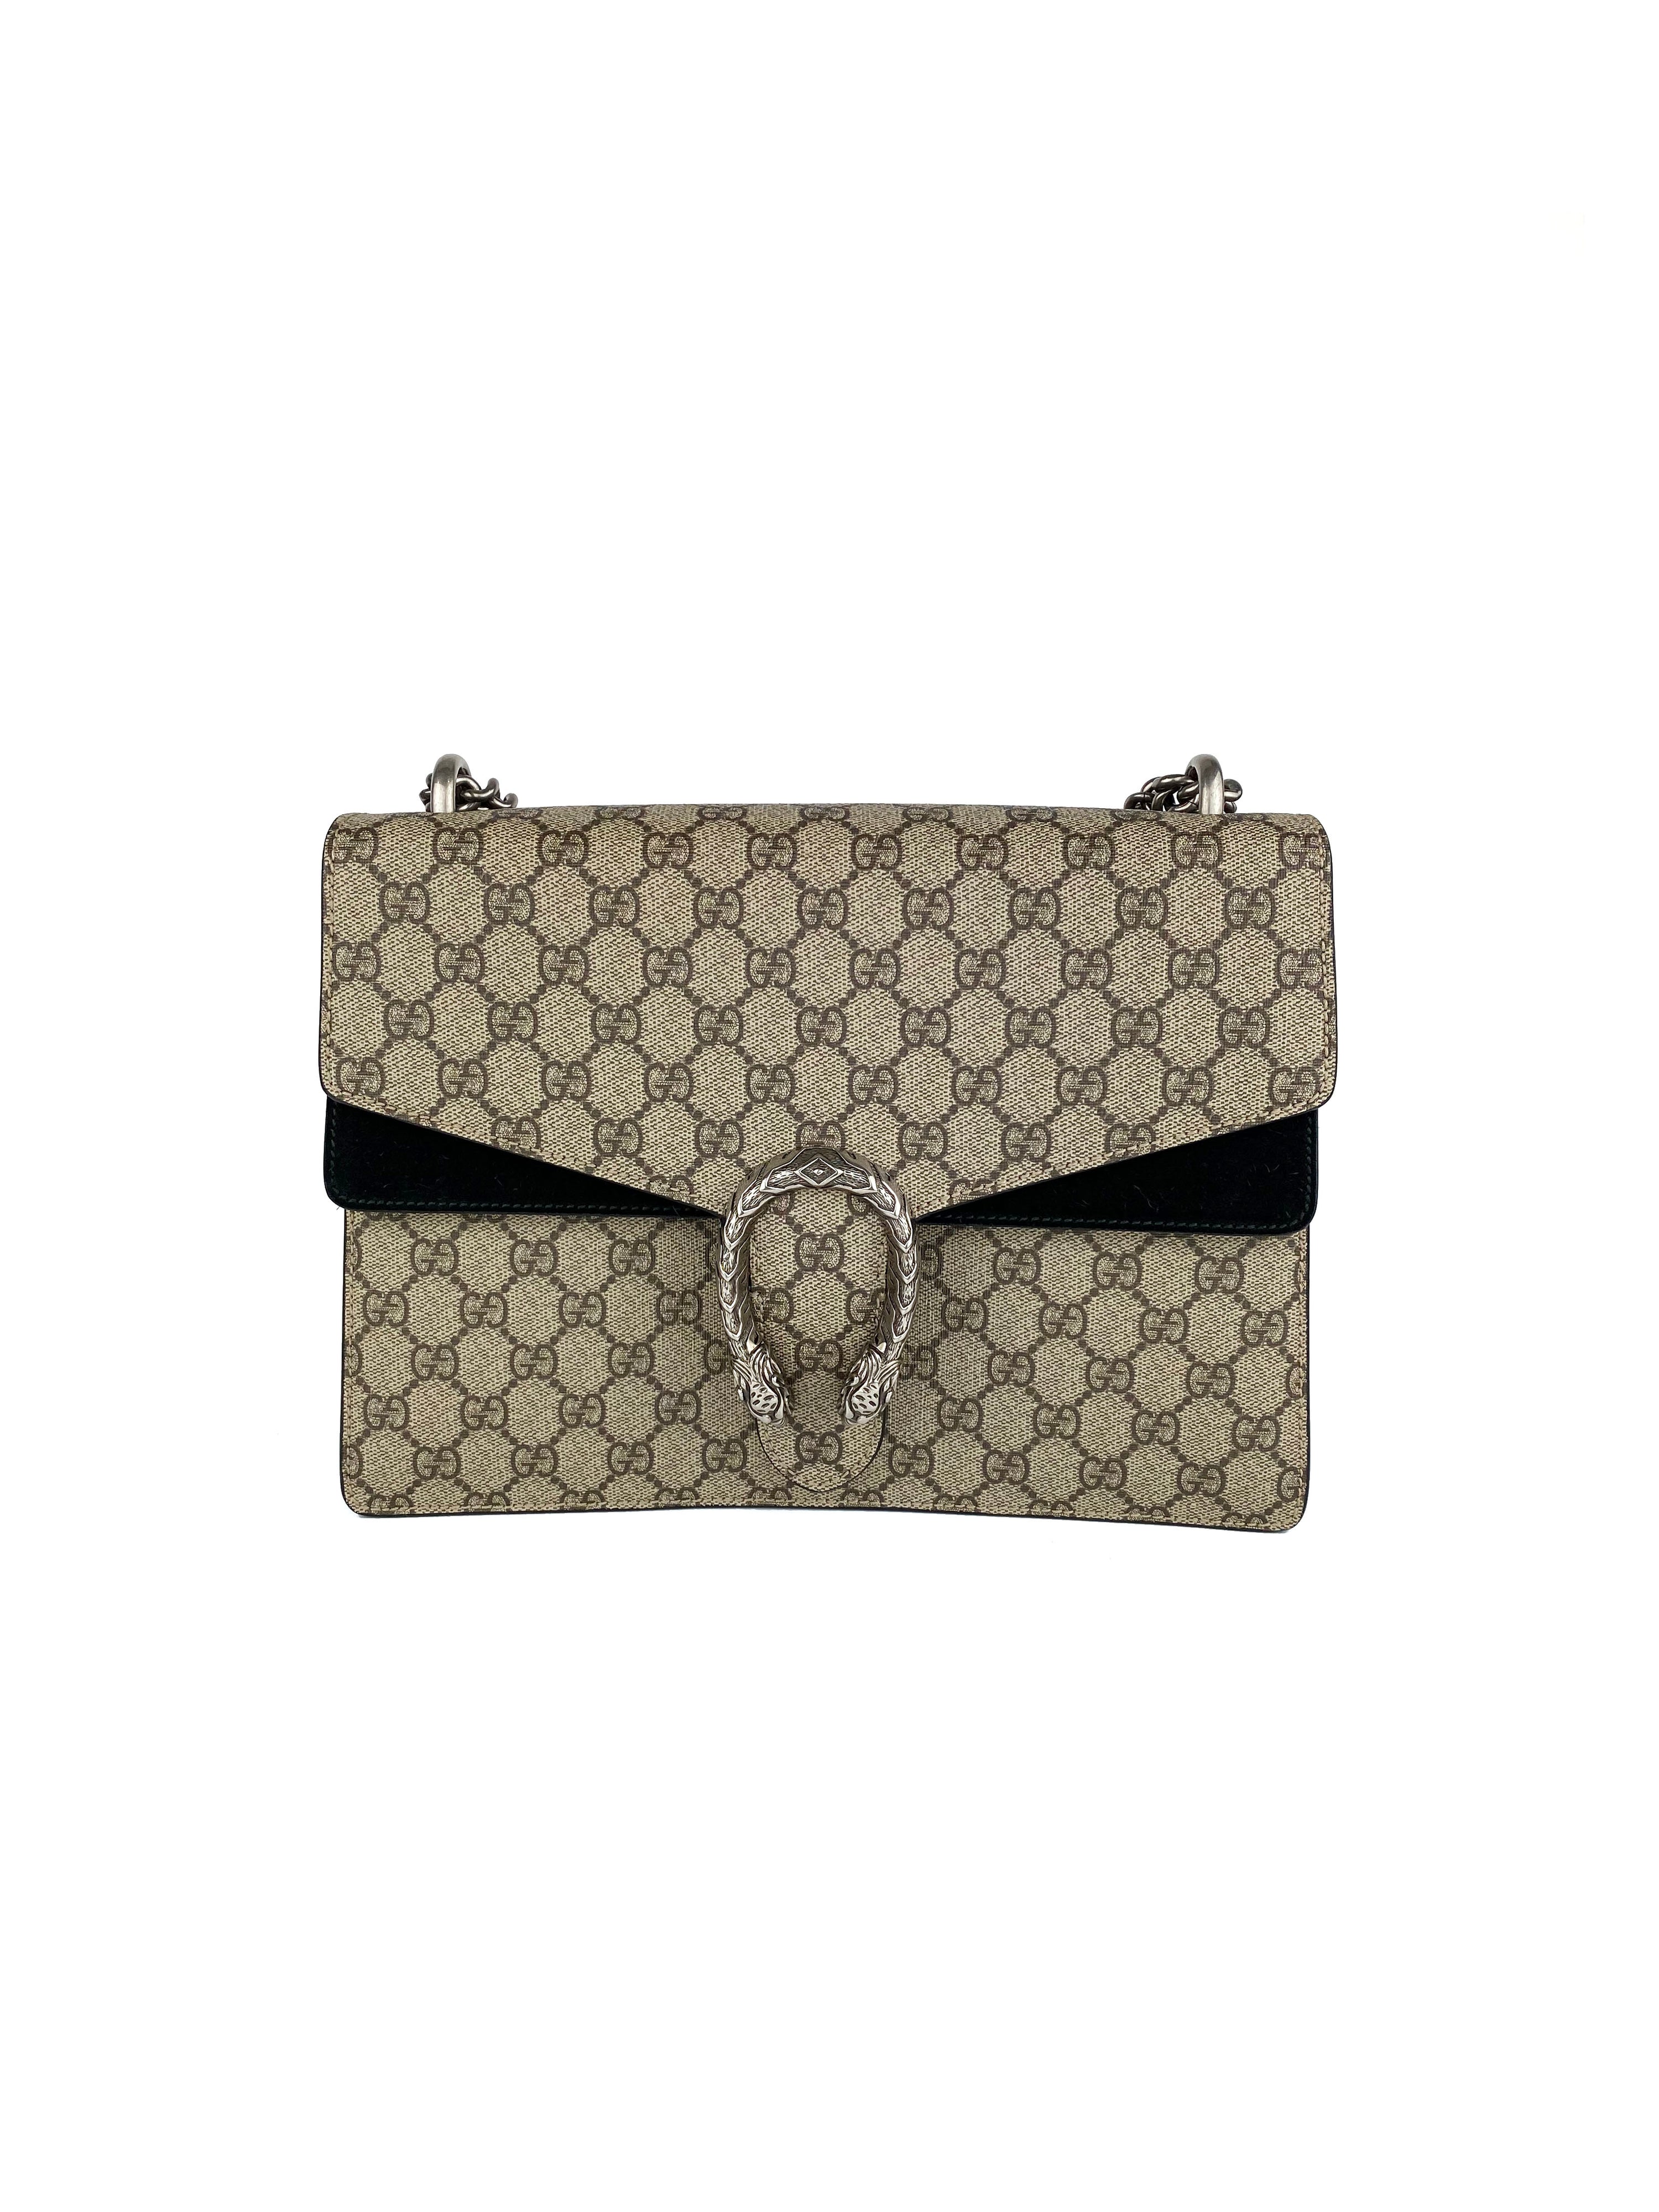 Gucci Dionysus Monogram Bag with Black Suede Trim